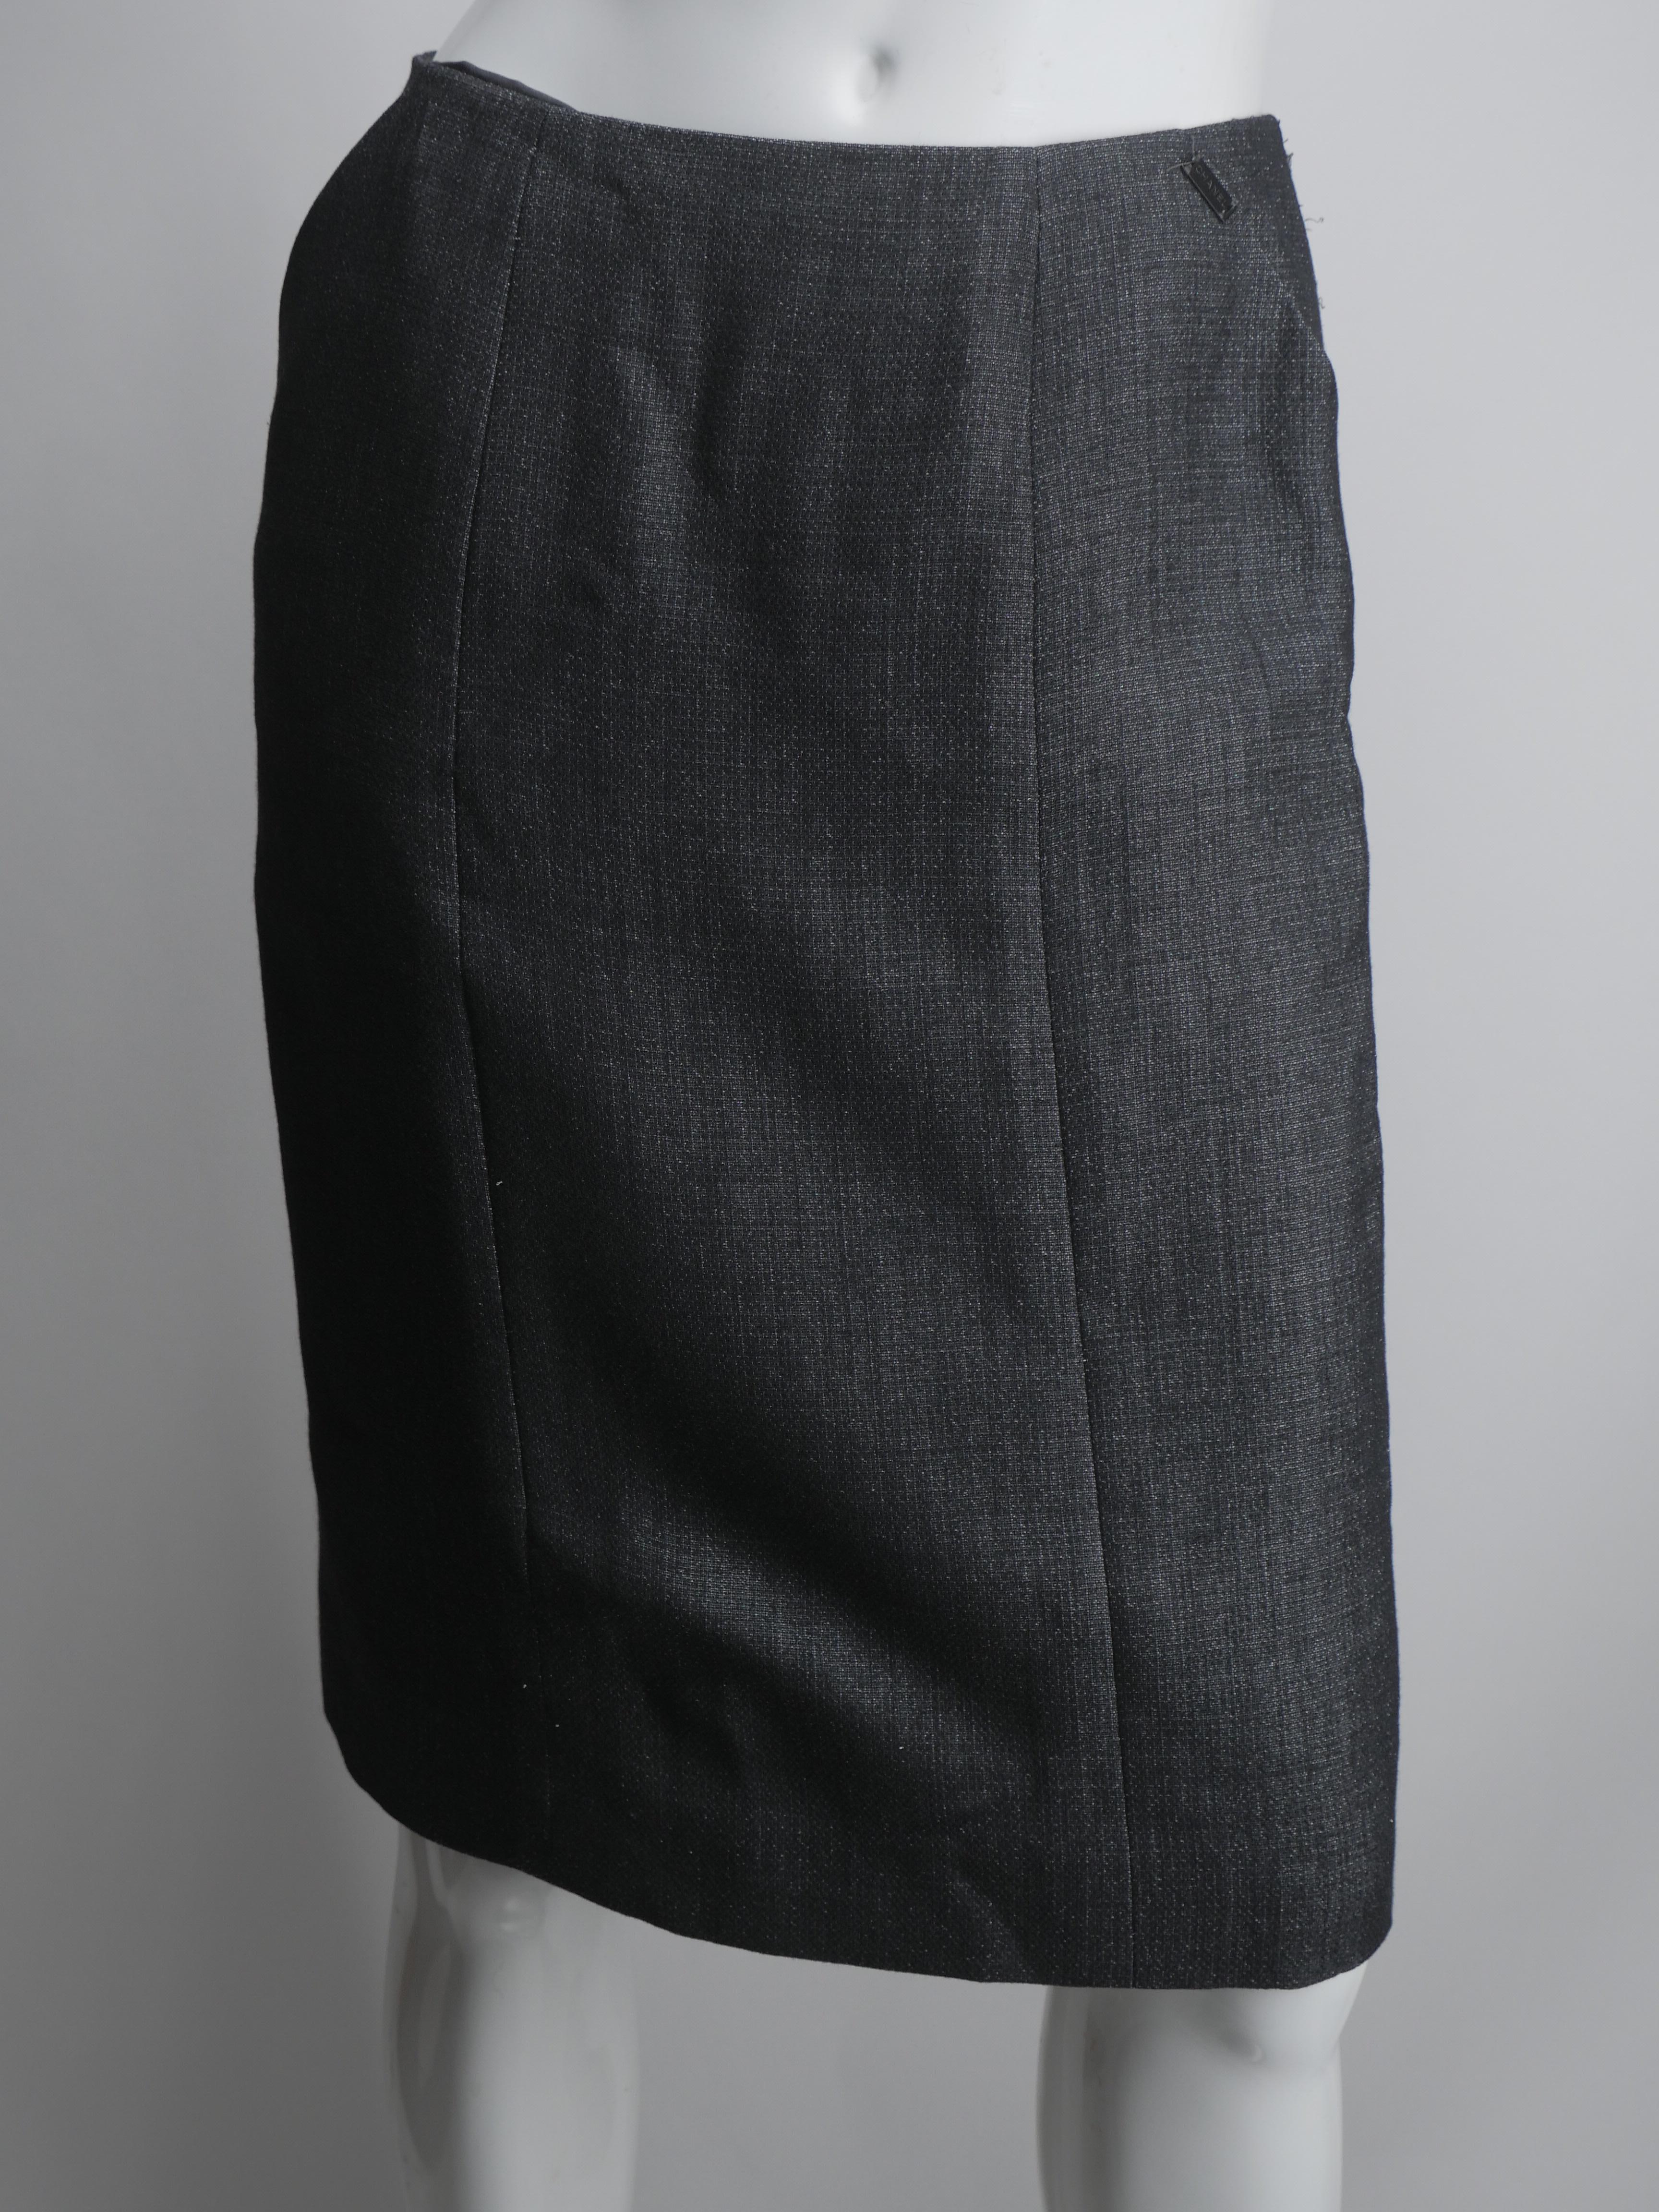 Chanel Size 38 99A Black Metallic Skirt Suit 5